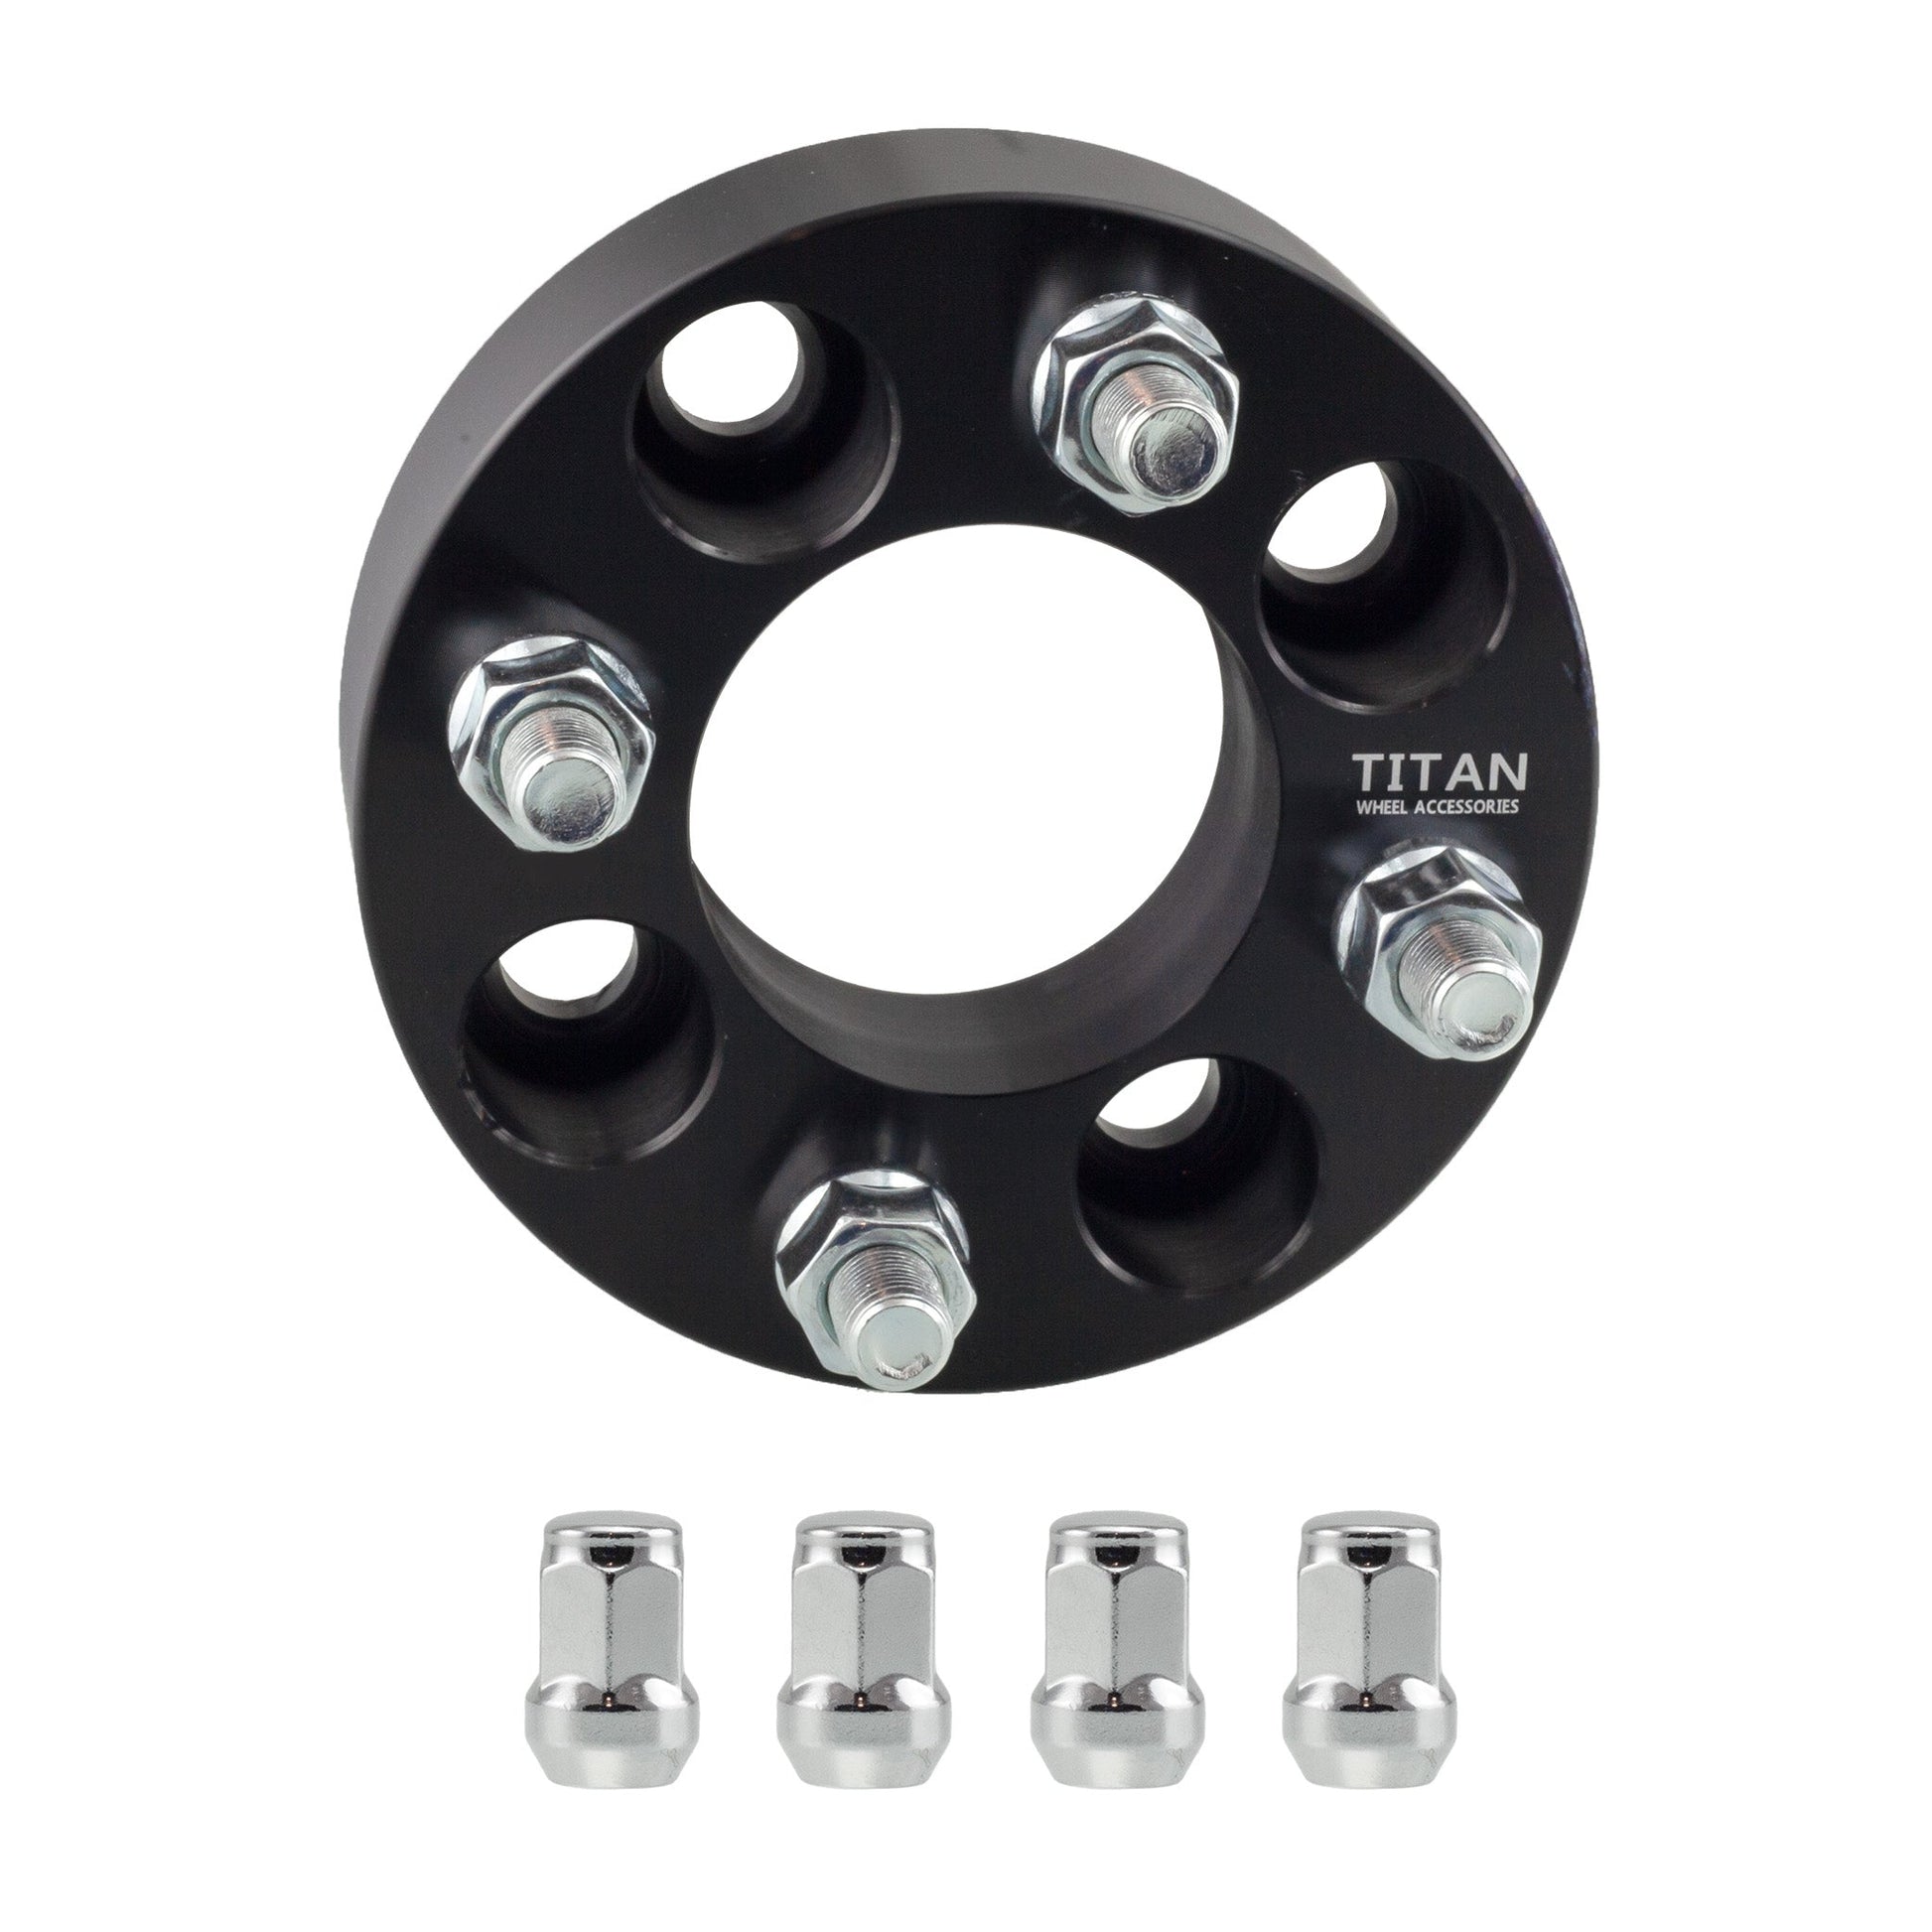 1" (25mm) Titan Wheel Spacers for EZ GO EZGO Club Car Golf Cart | 4x4 | 1/2x20 Studs | Titan Wheel Accessories